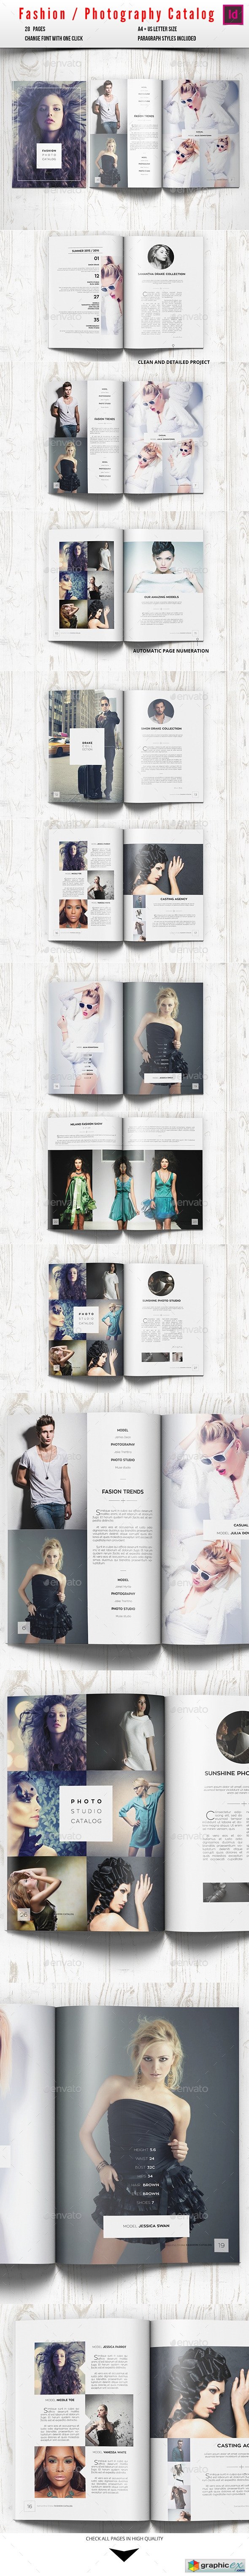 Fashion Photography Catalog / Brochure